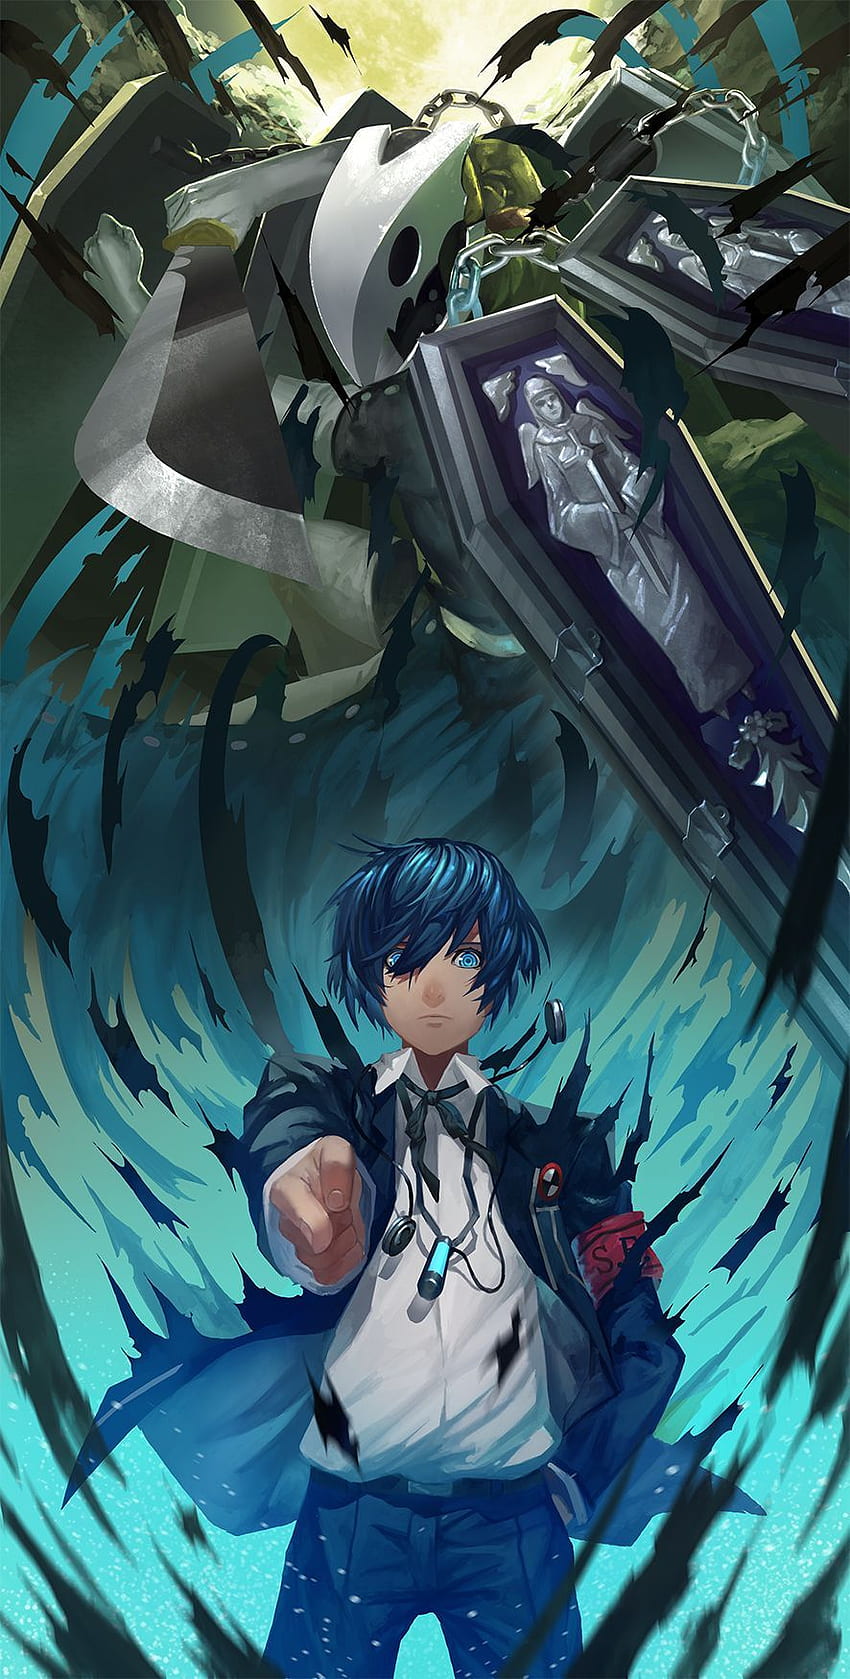 Persona 3 wallpaper by Randoml4d72  Download on ZEDGE  2263